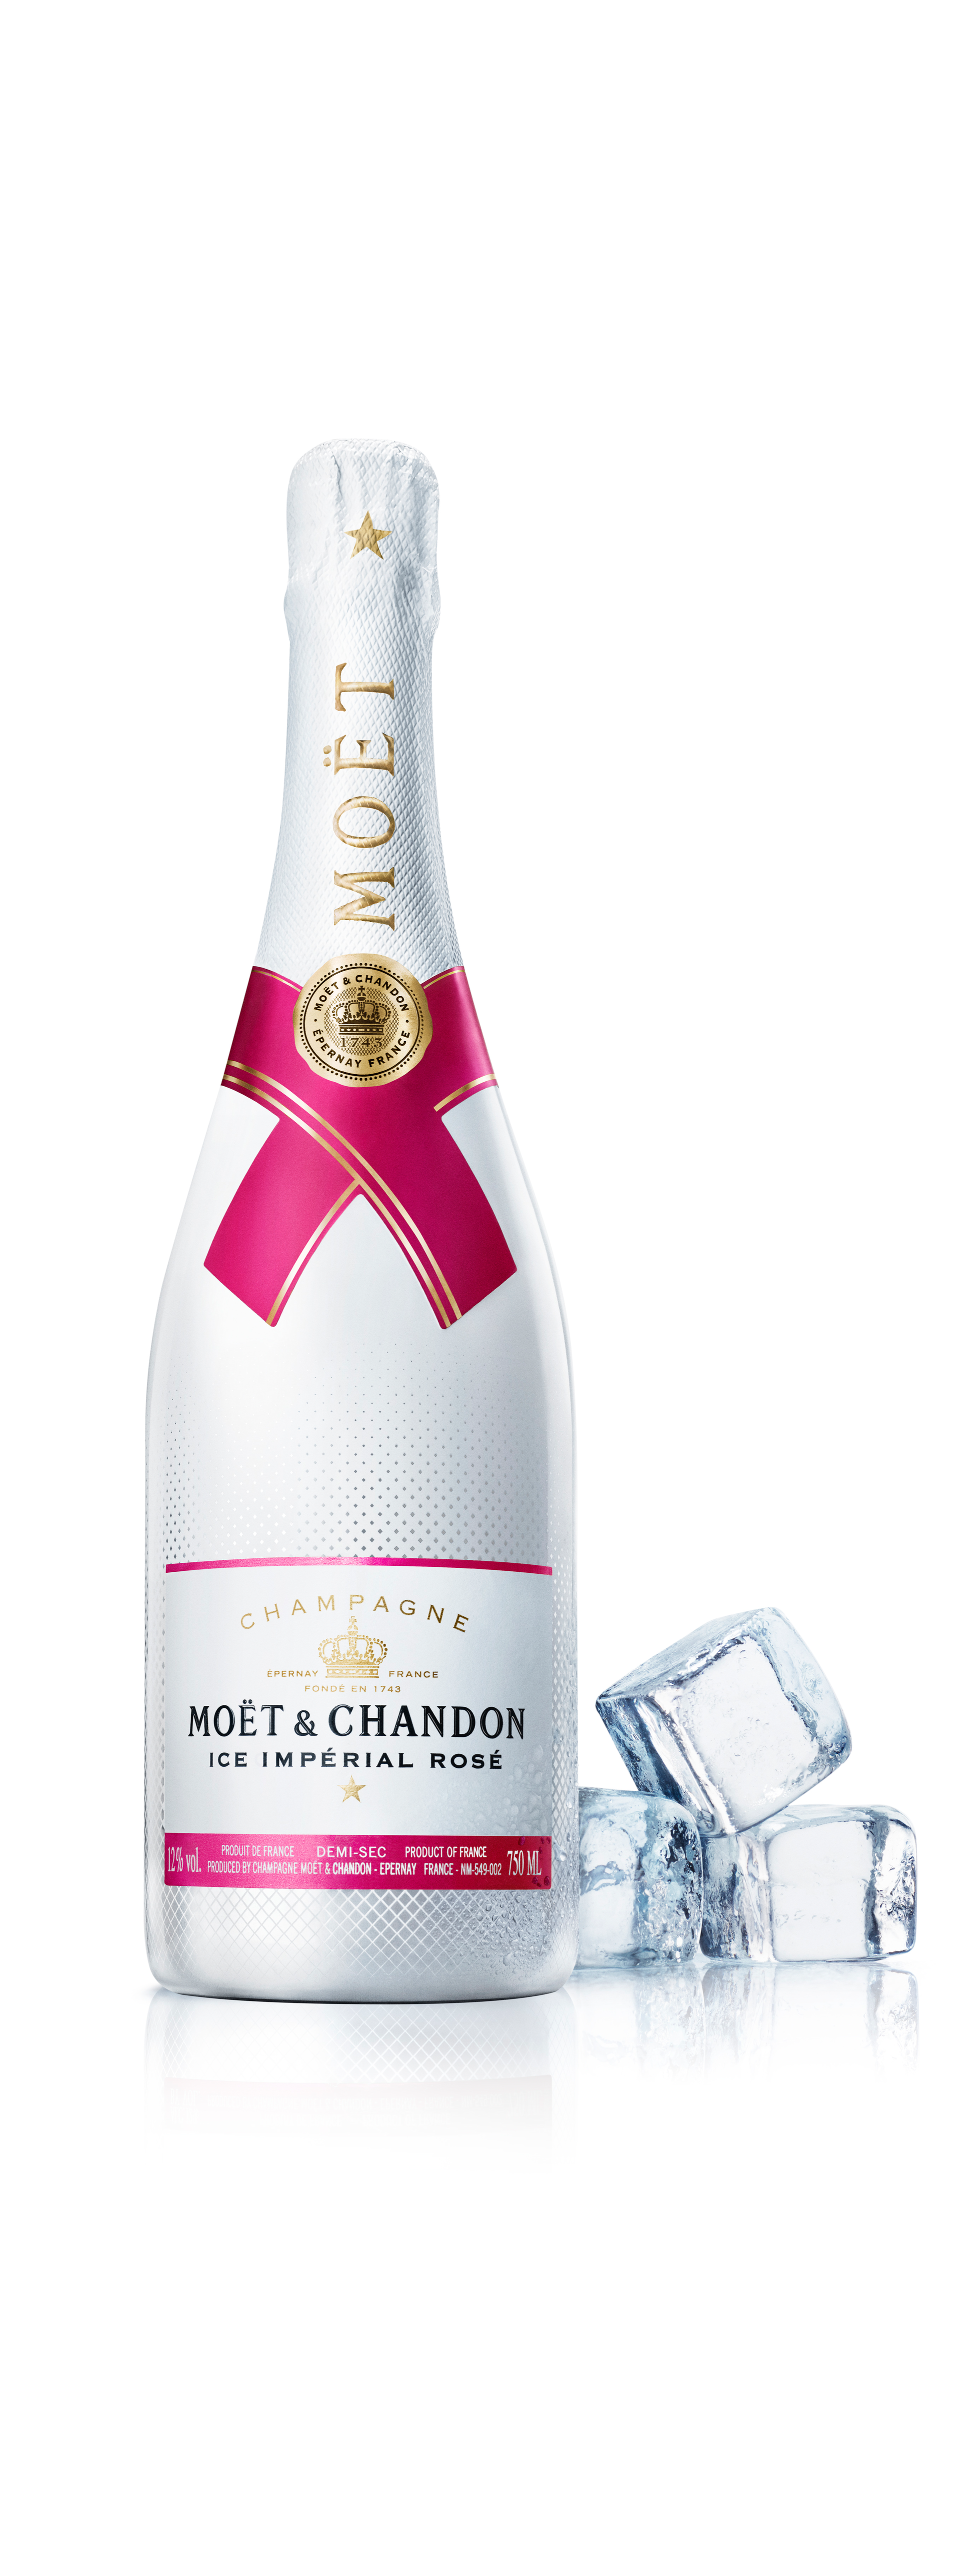 Moet & Chandon Rosé ICE Imperial